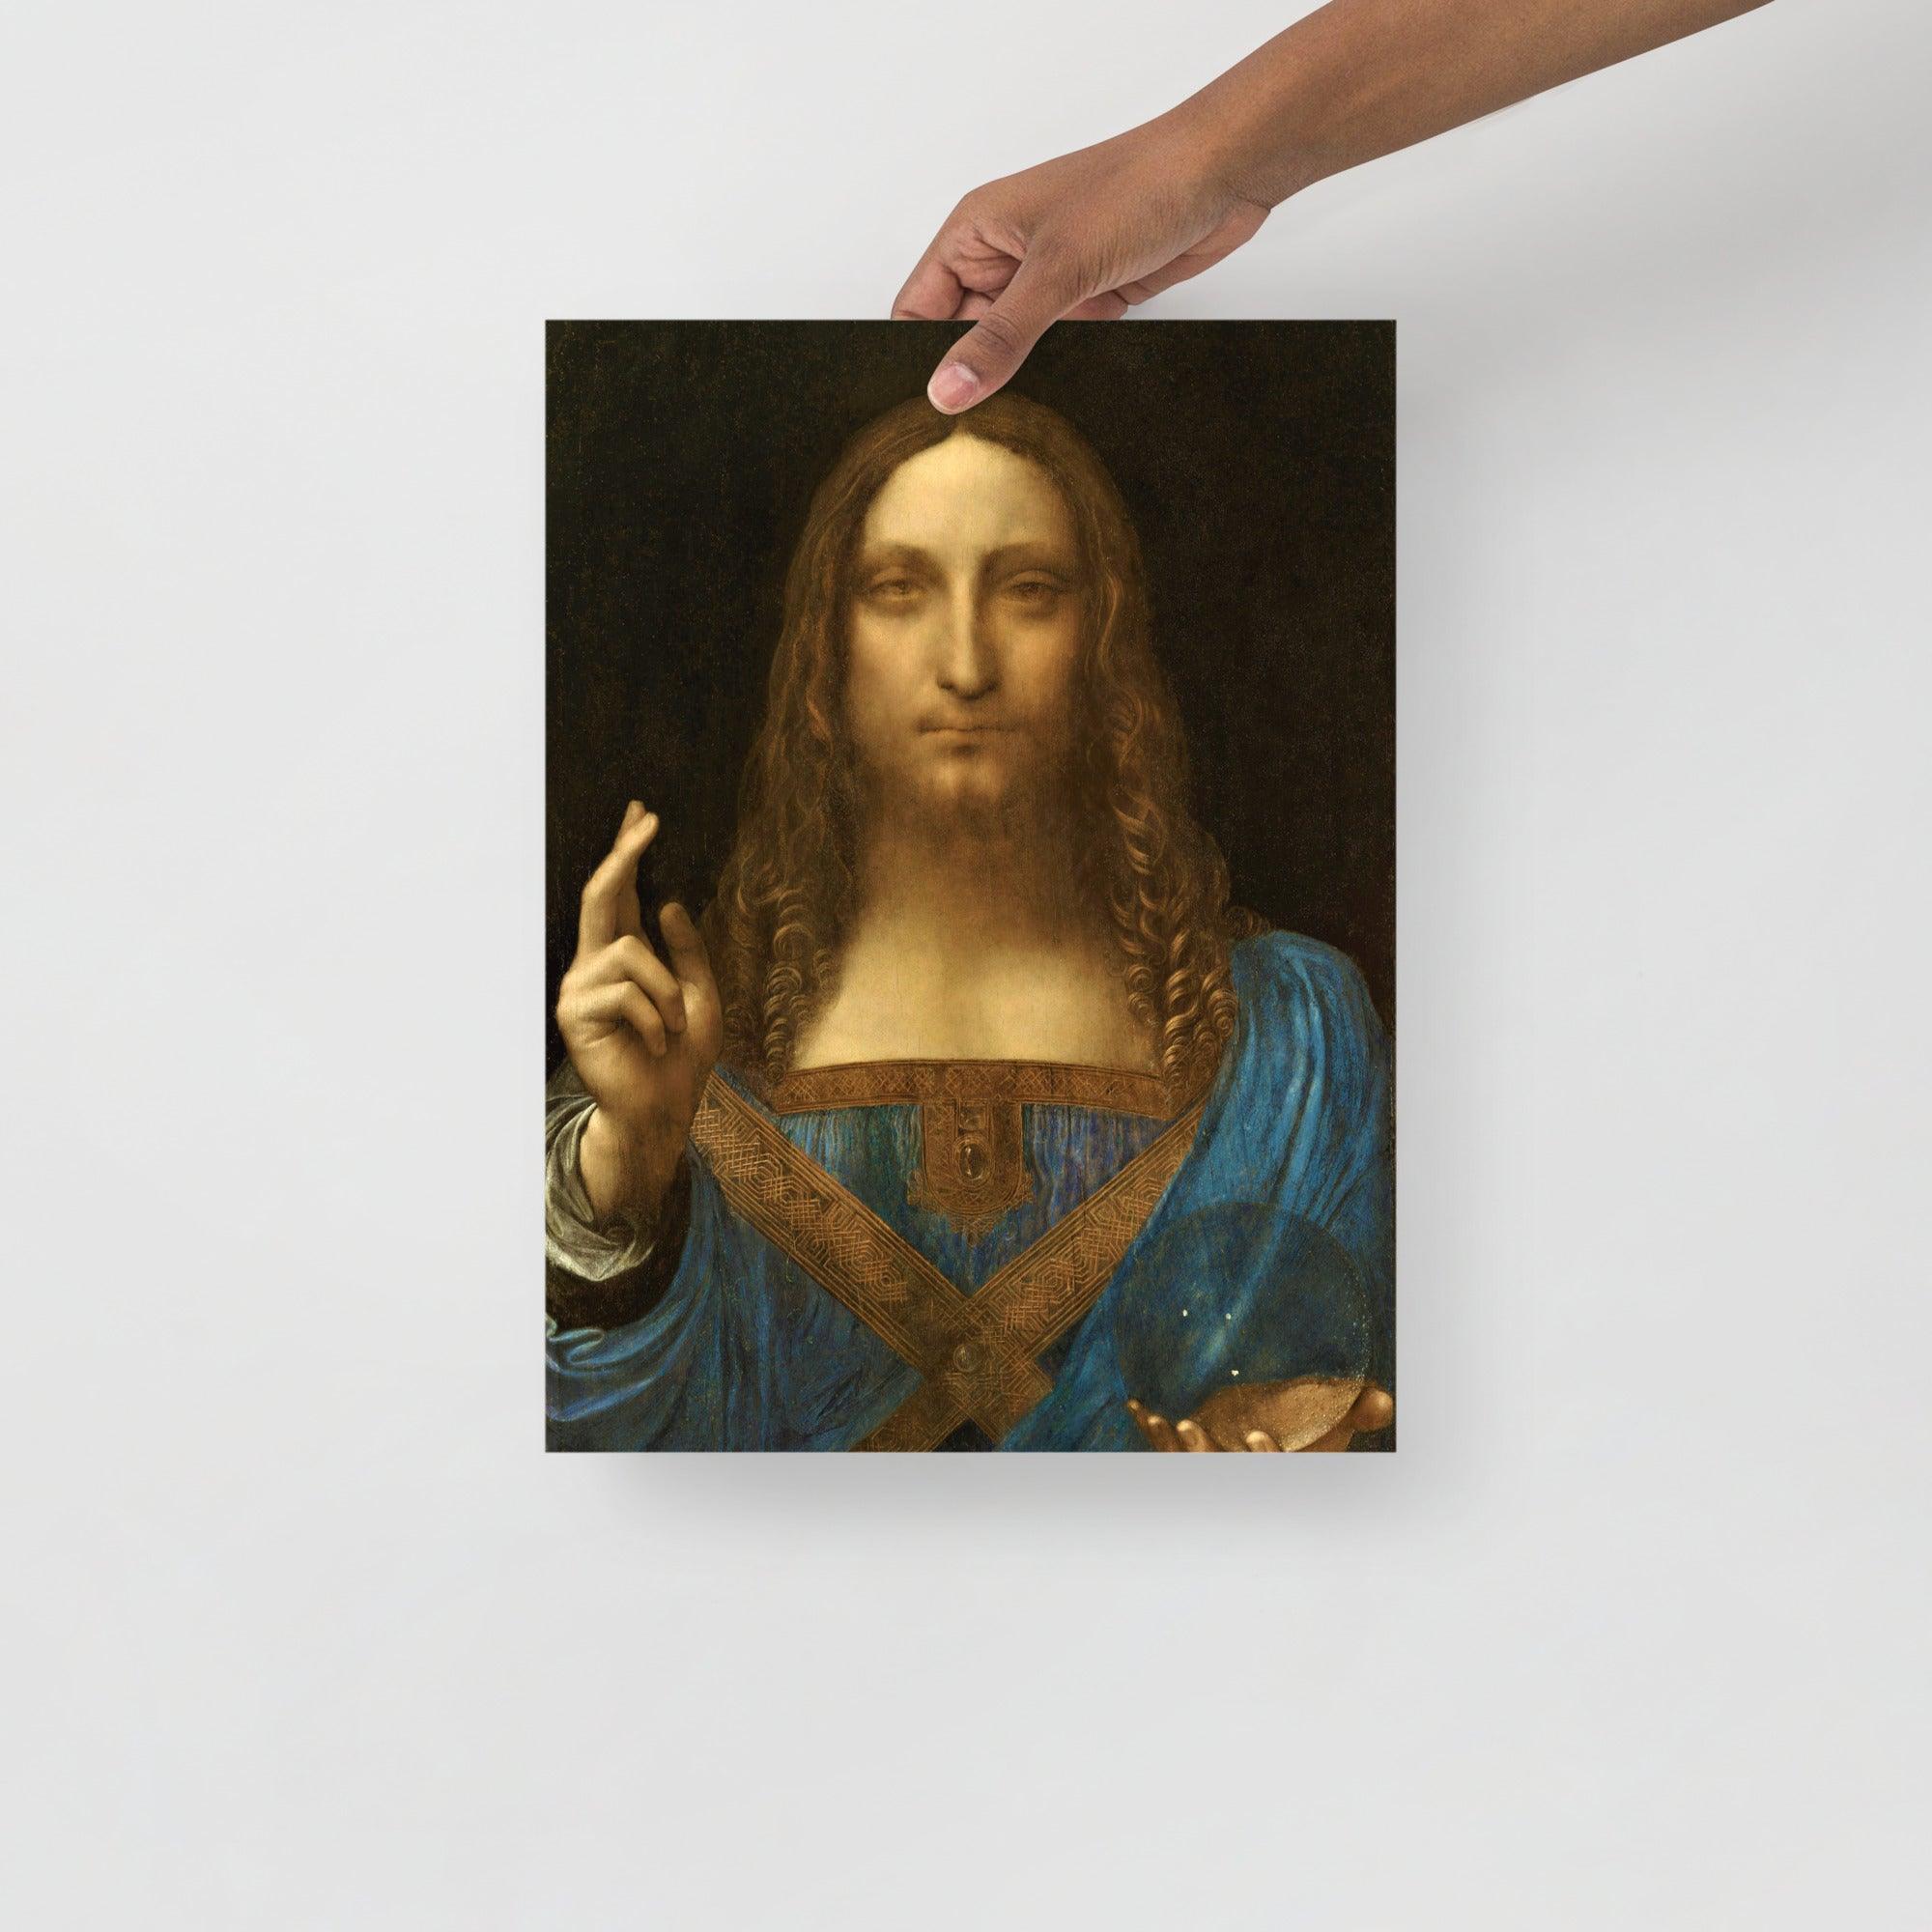 A Salvator Mundi by Leonardo Da Vinci poster on a plain backdrop in size 12x16”.